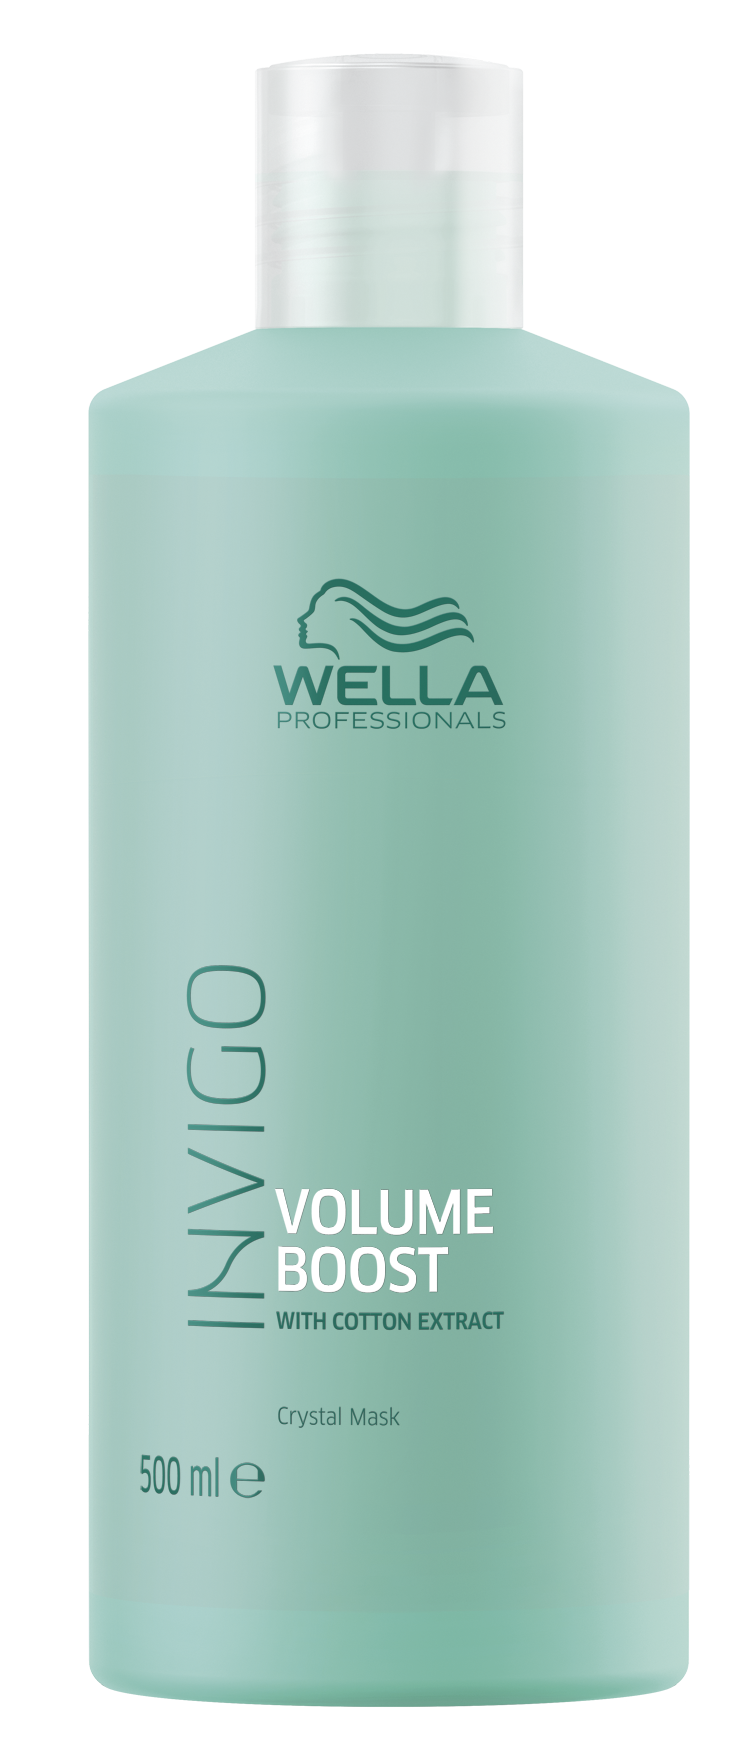 WELLA PROFESSIONALS Маска-кристалл уплотняющая / Volume Boost 500 мл wella professionals маска кристалл уплотняющая volume boost 500 мл